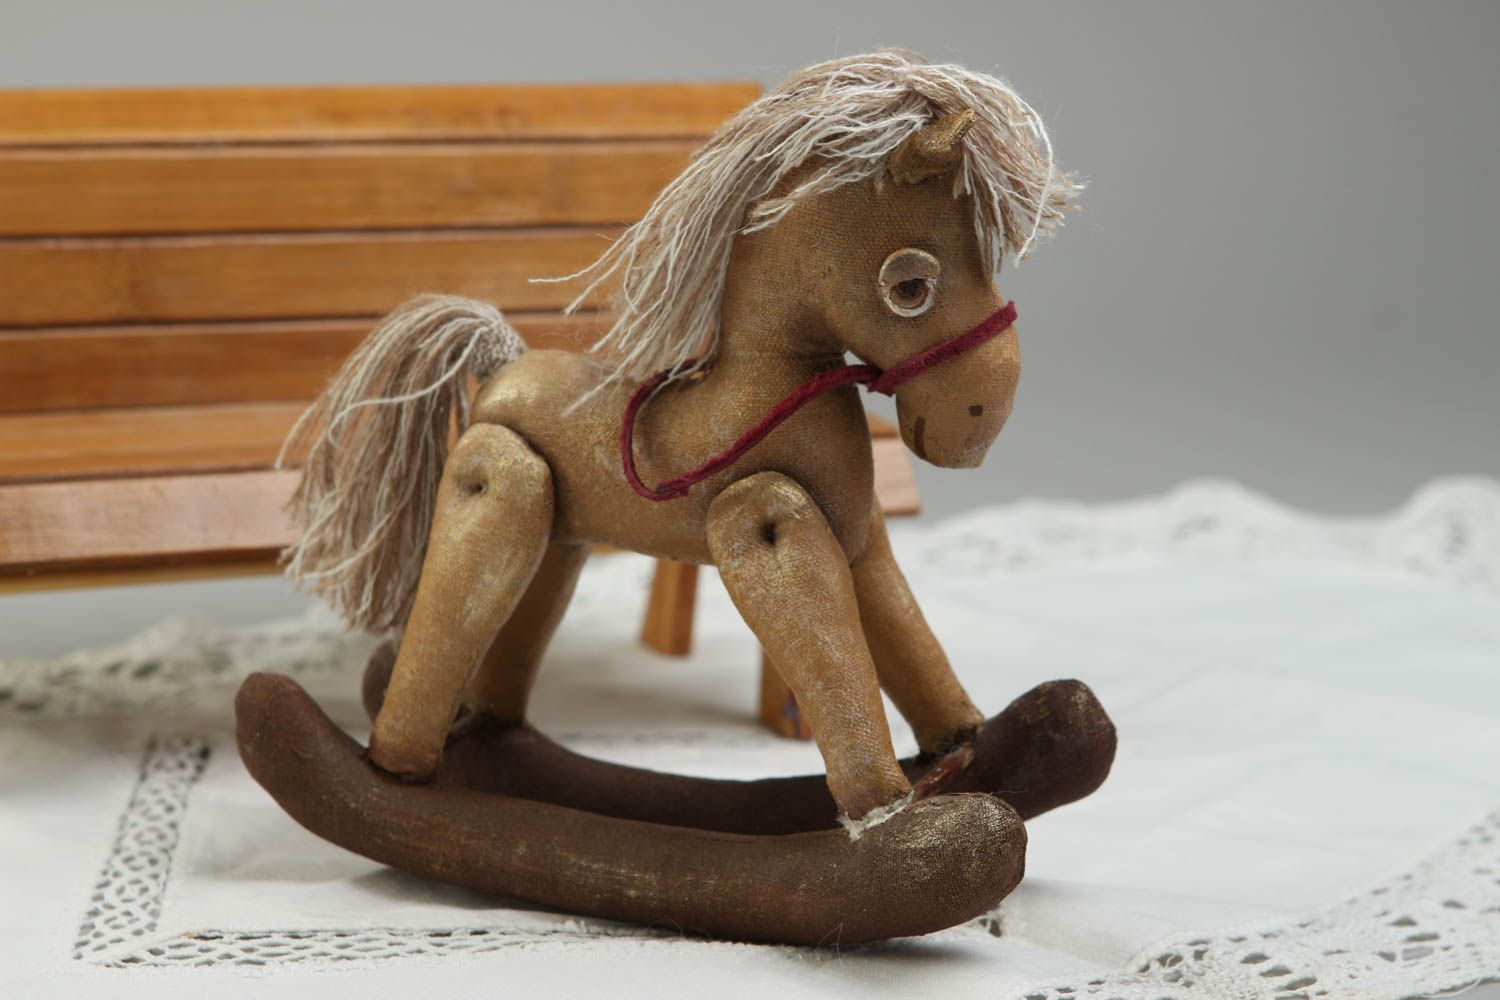 Handmade rocky horse toy decorative toys nursery decor present for child photo 1